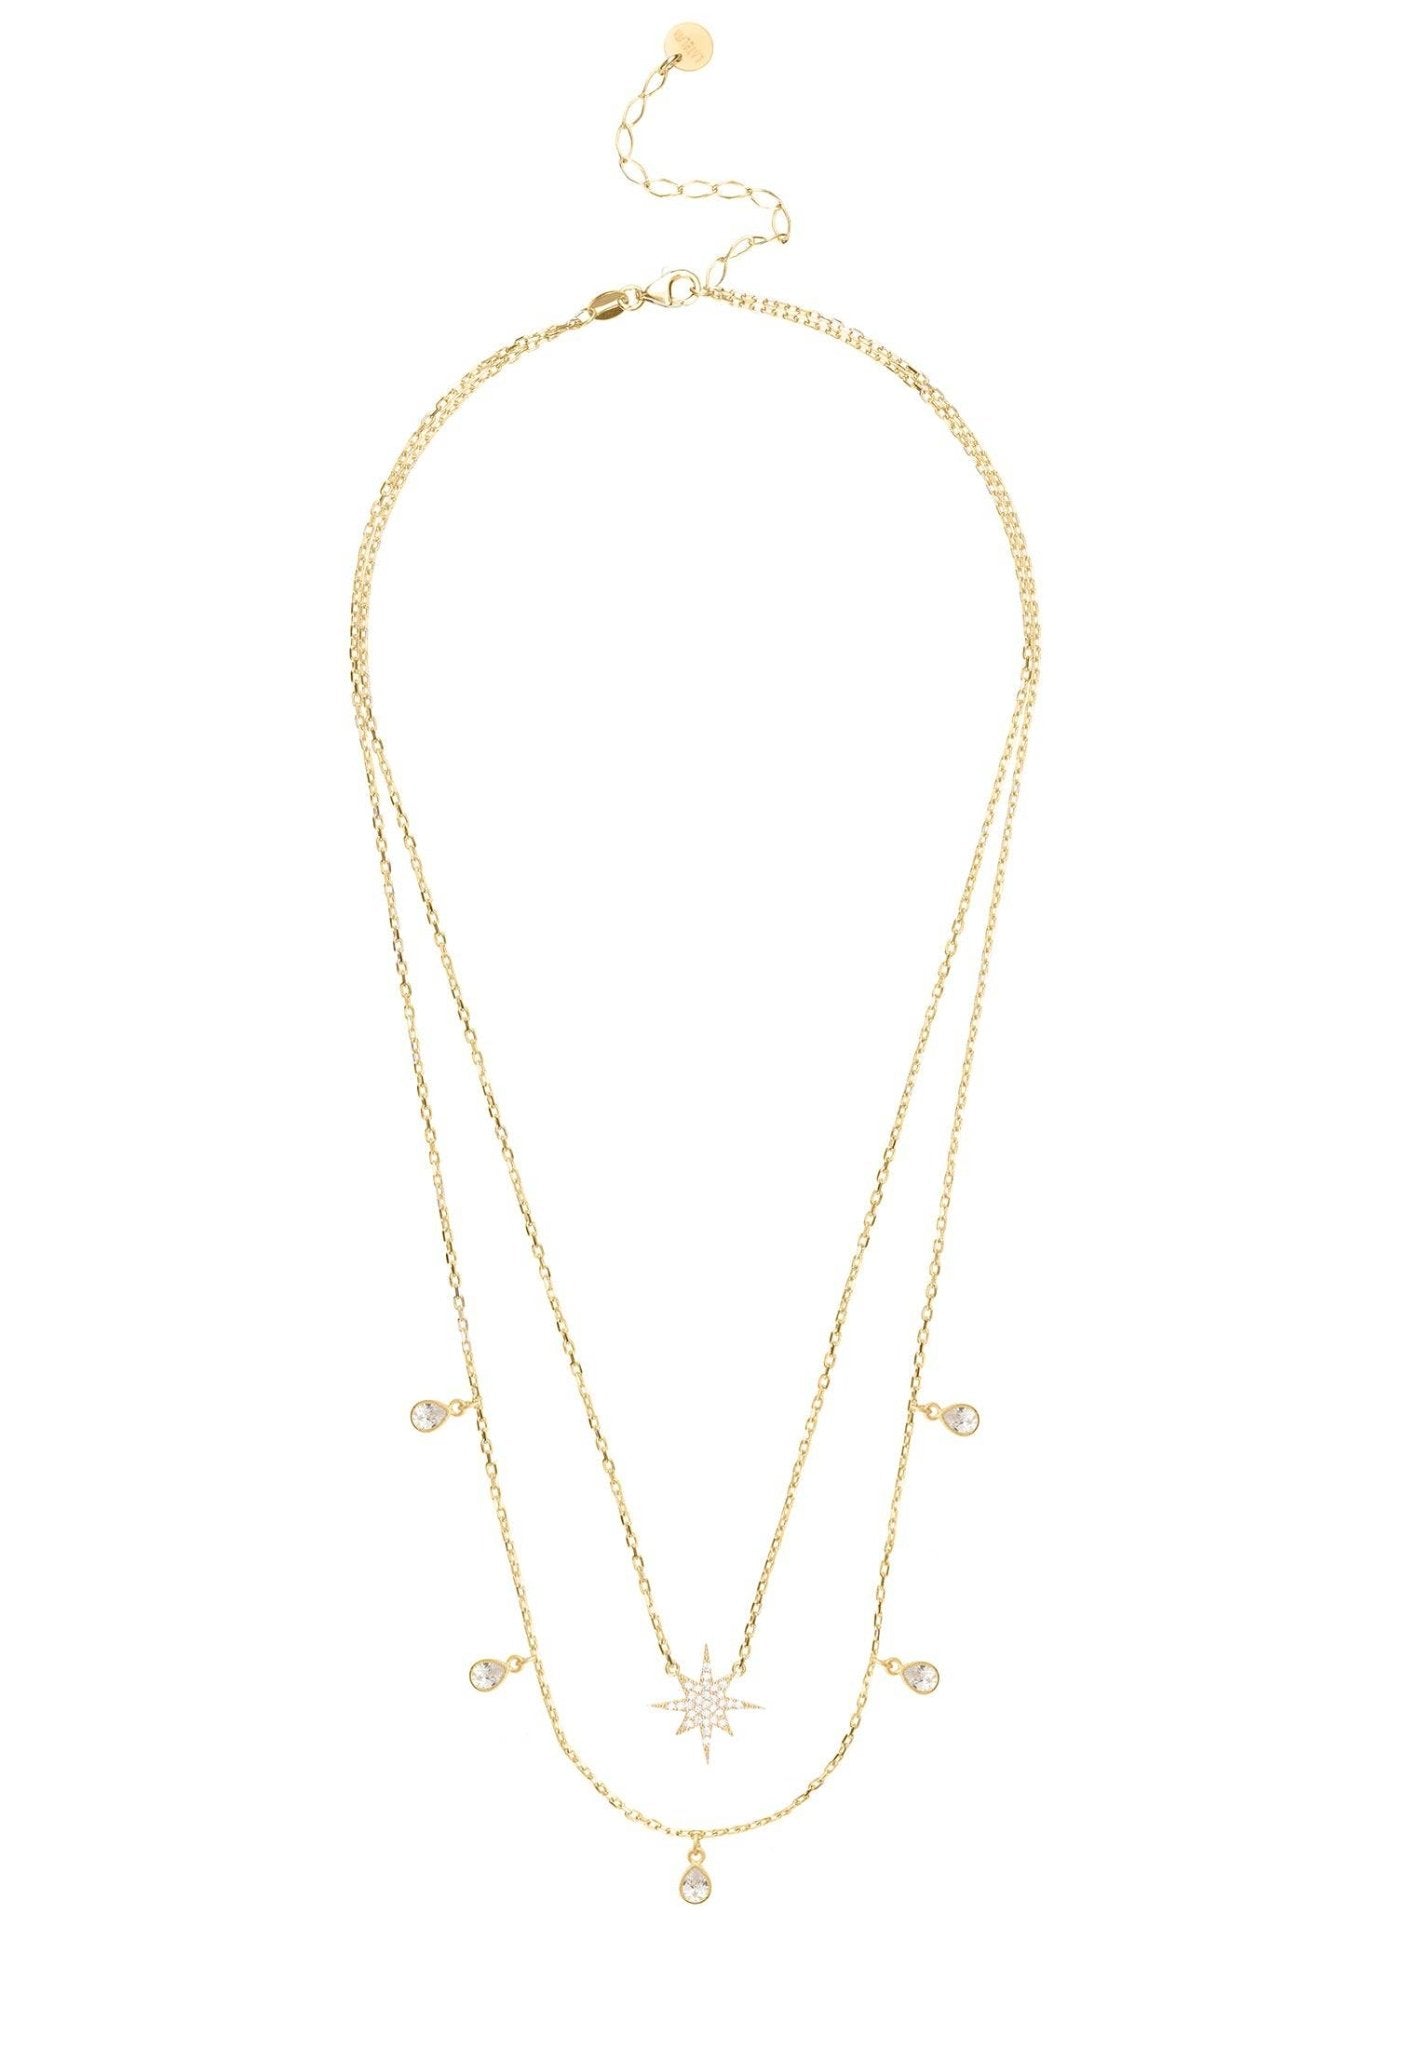 Starburst Double Strand Layered Necklace Gold White - LATELITA Necklaces